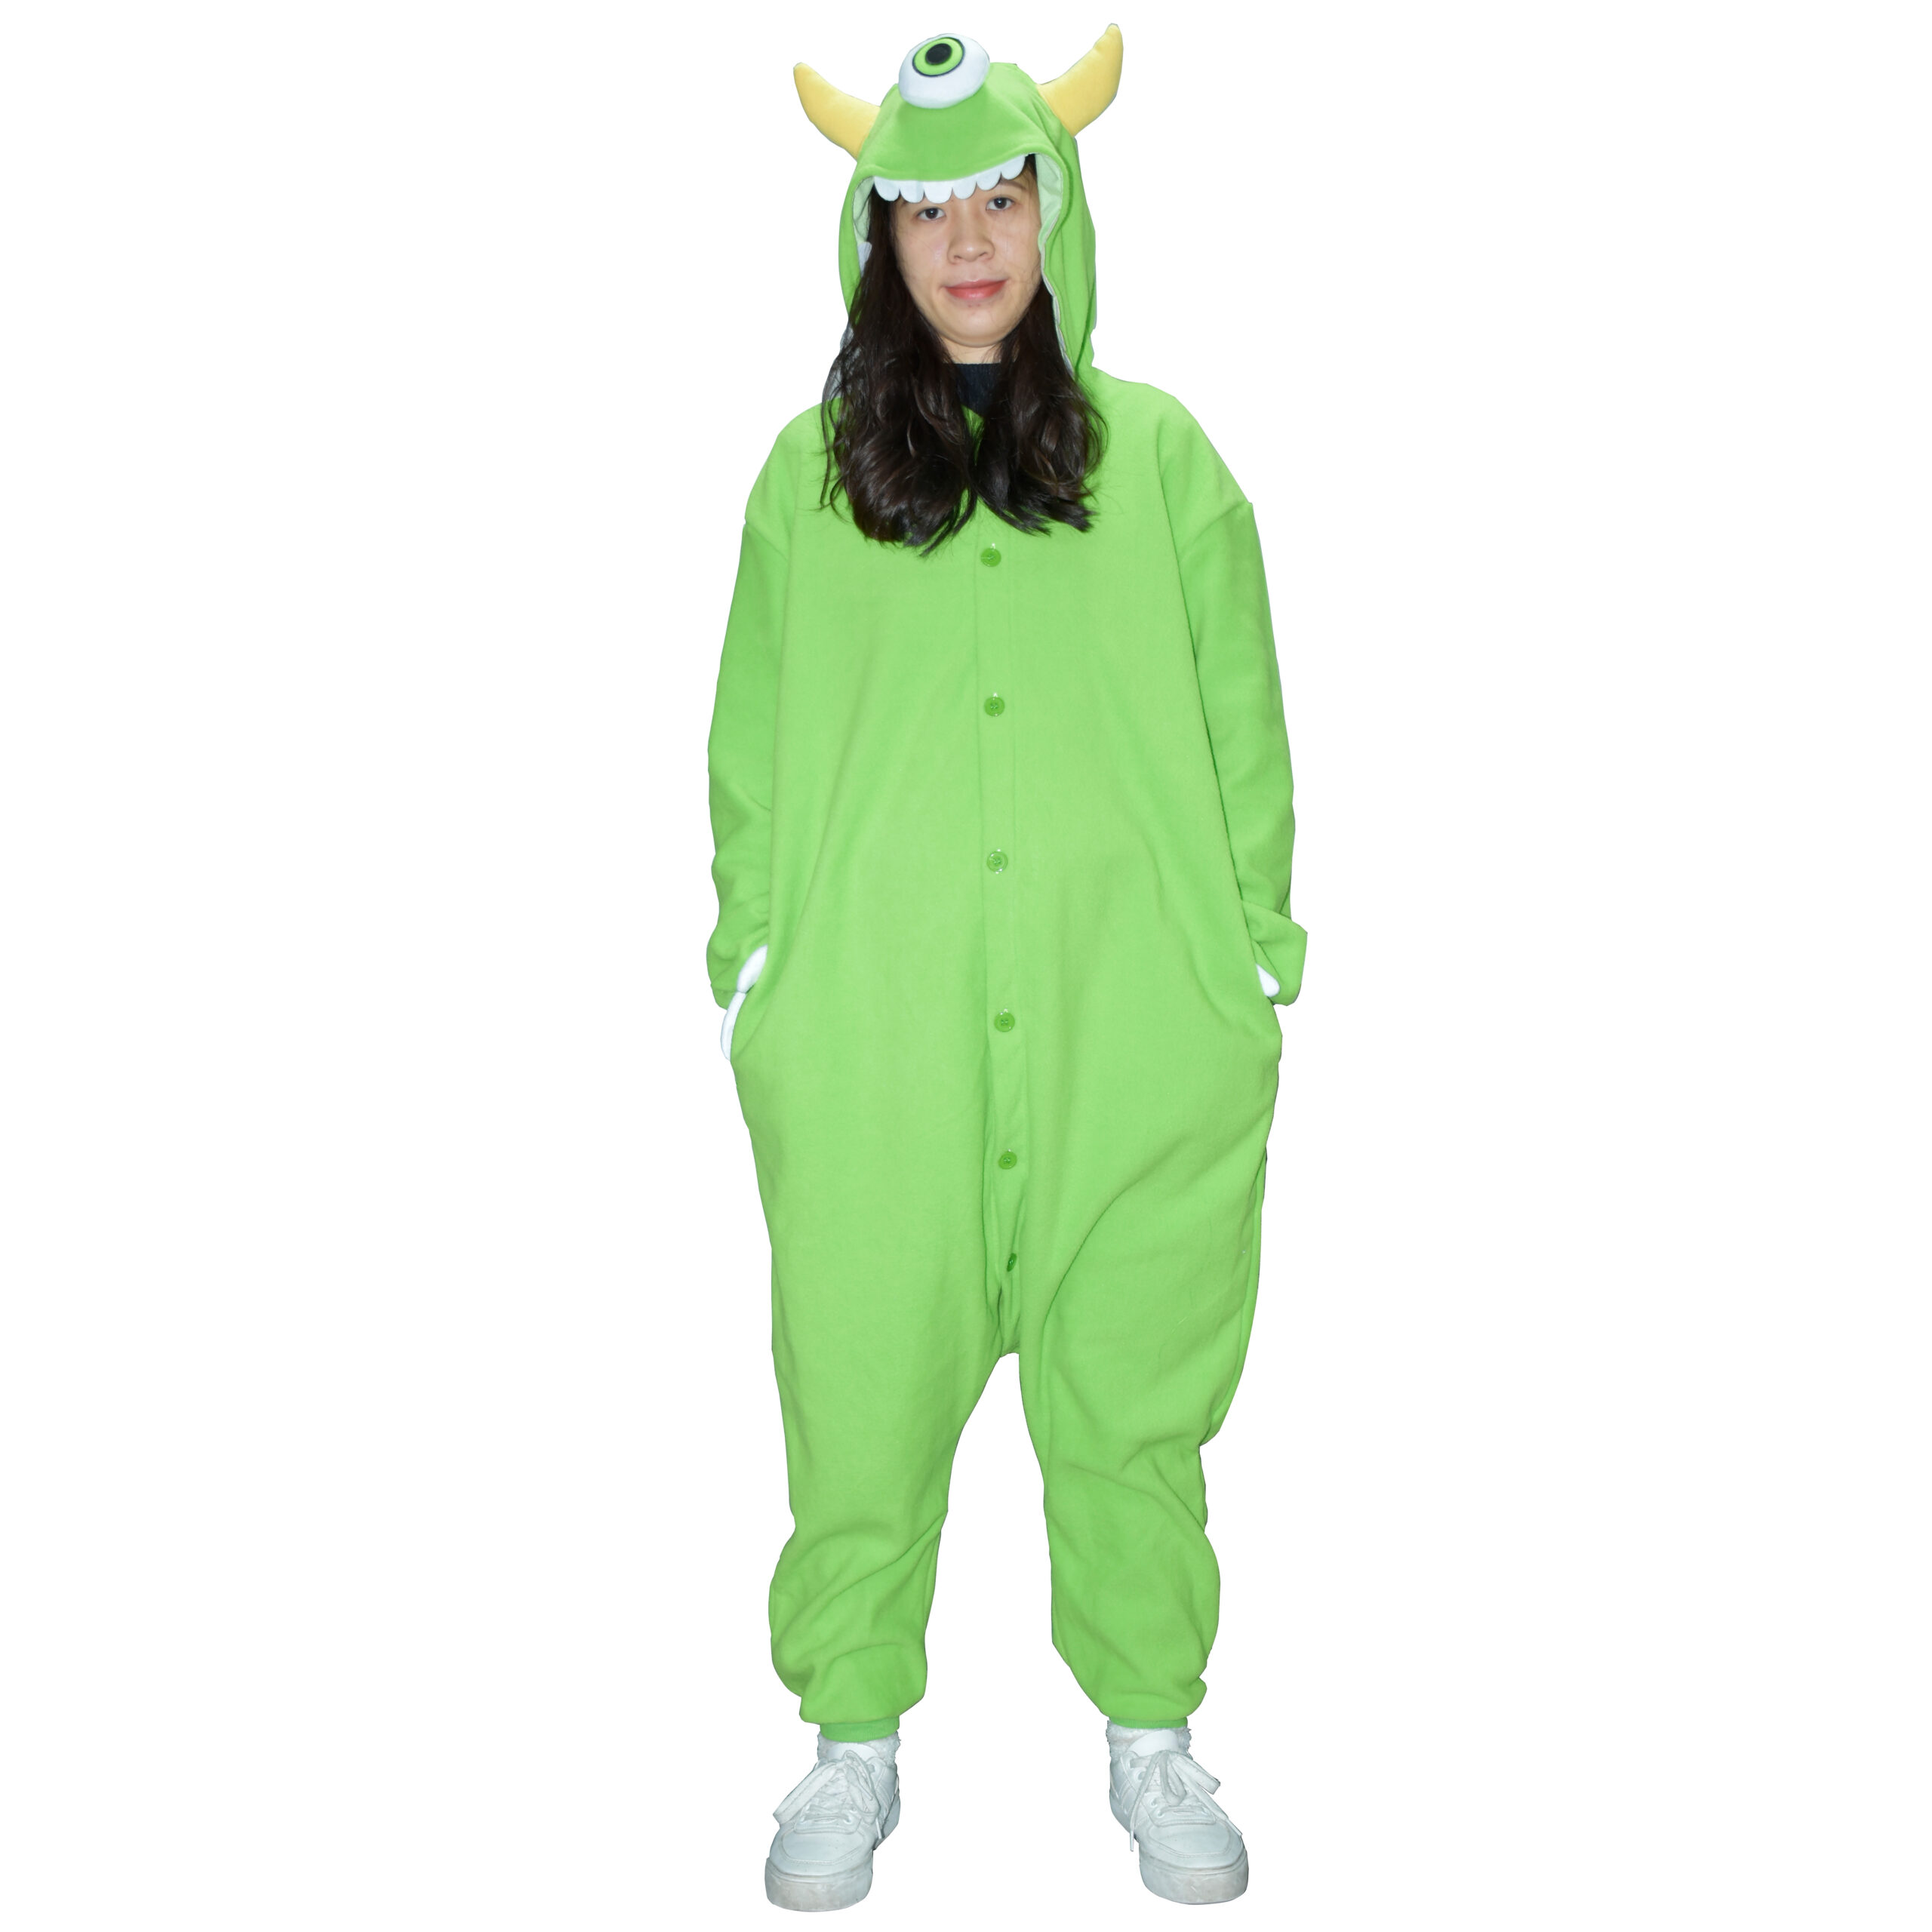 Mike Monster Jumpsuit Polar Fleece Sleepwear Unisex Winter Onesie Homewear Halloween Funny Cospaly Costume Cartoon Animal Outfit